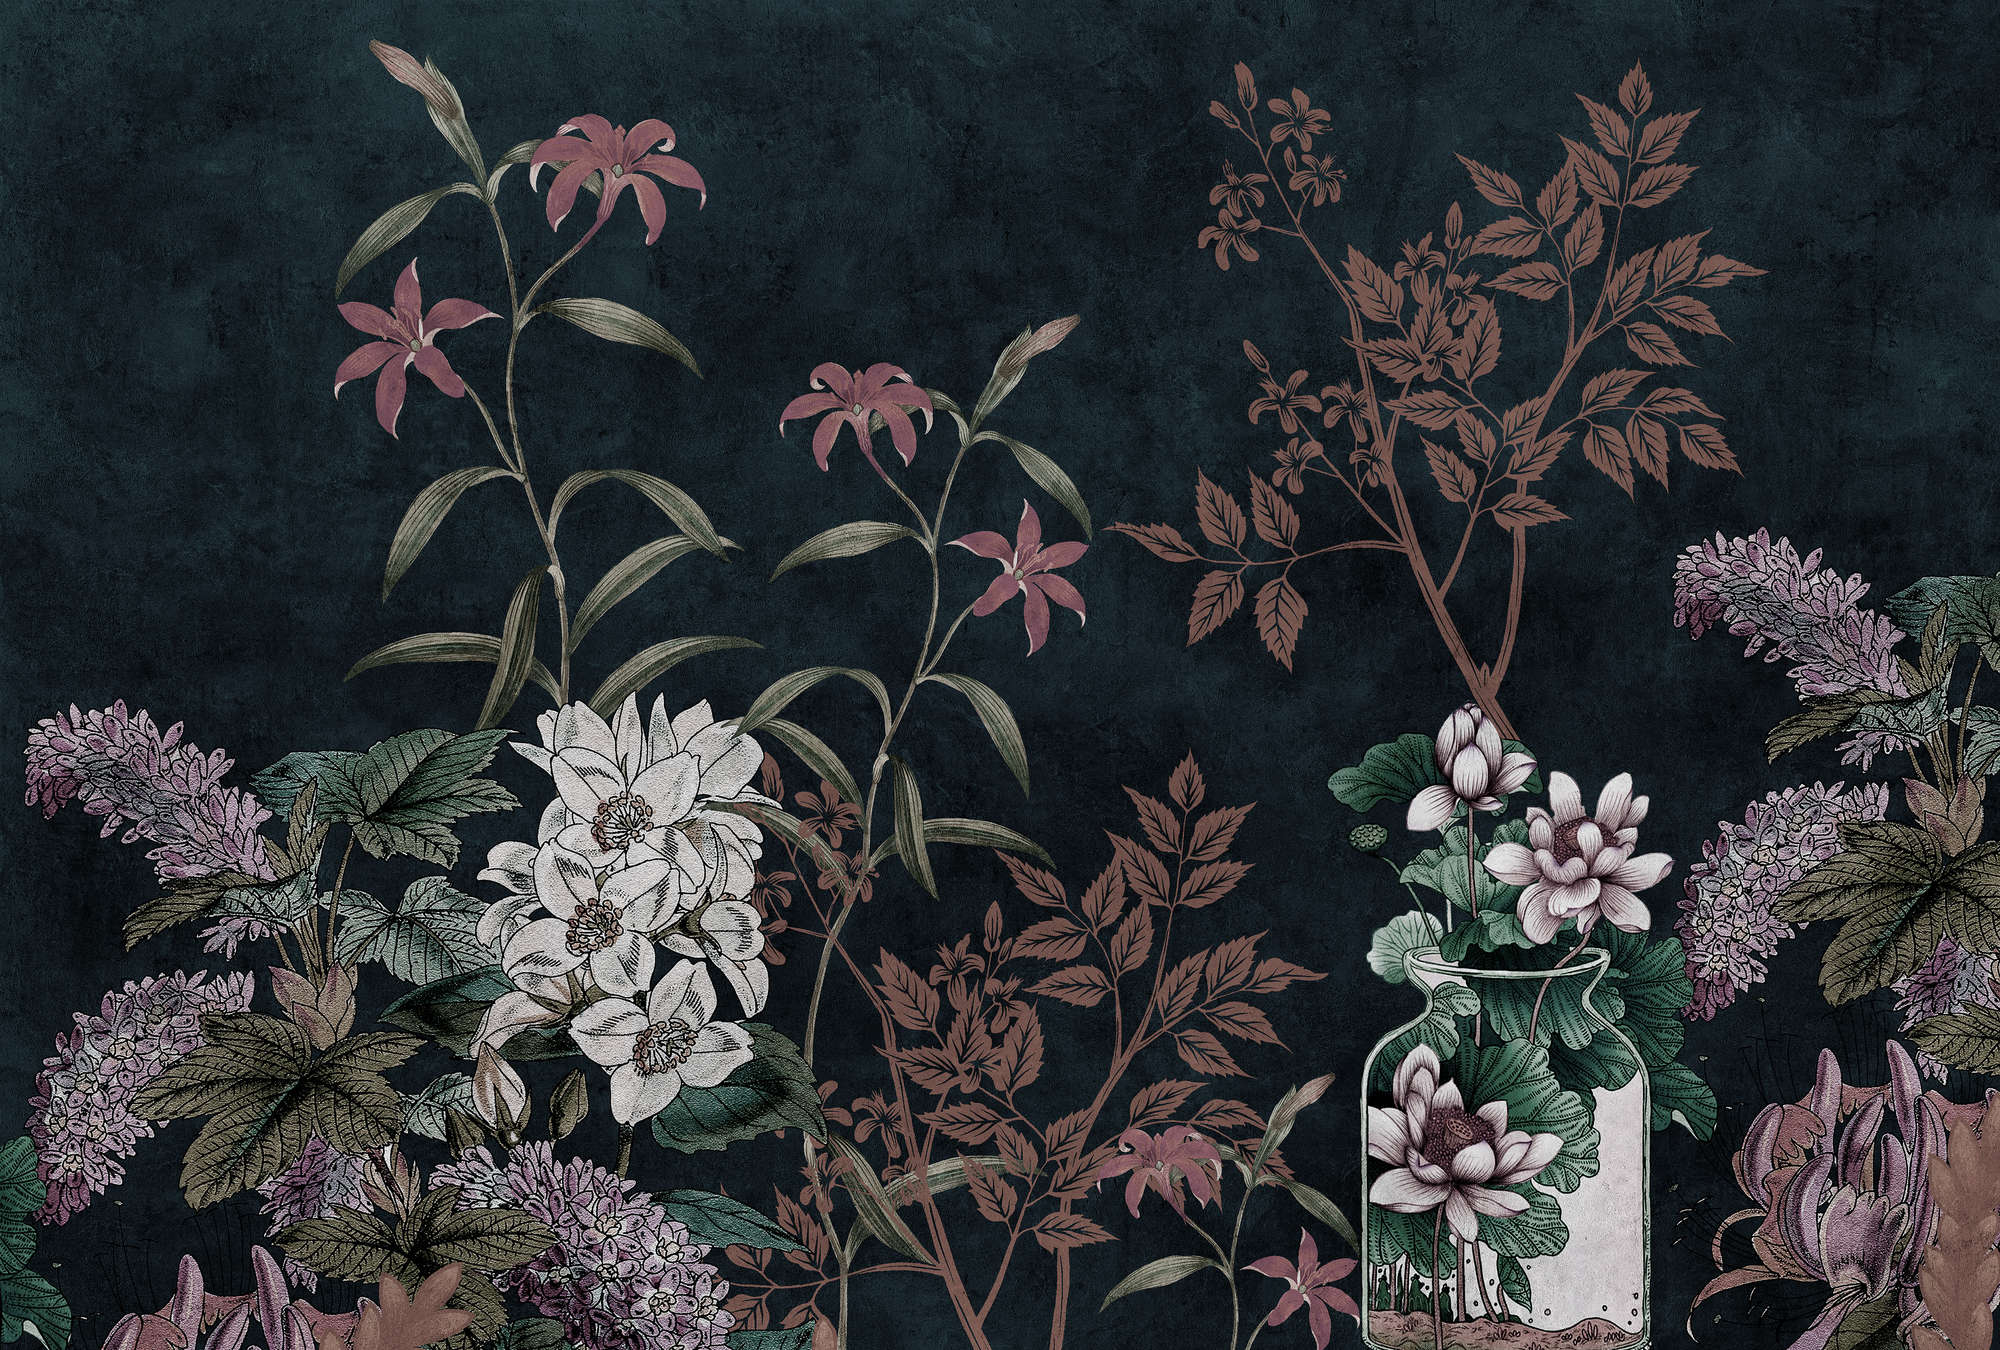             Dark Room 2 – Schwarze Fototapete Botanical Muster Rosa
        